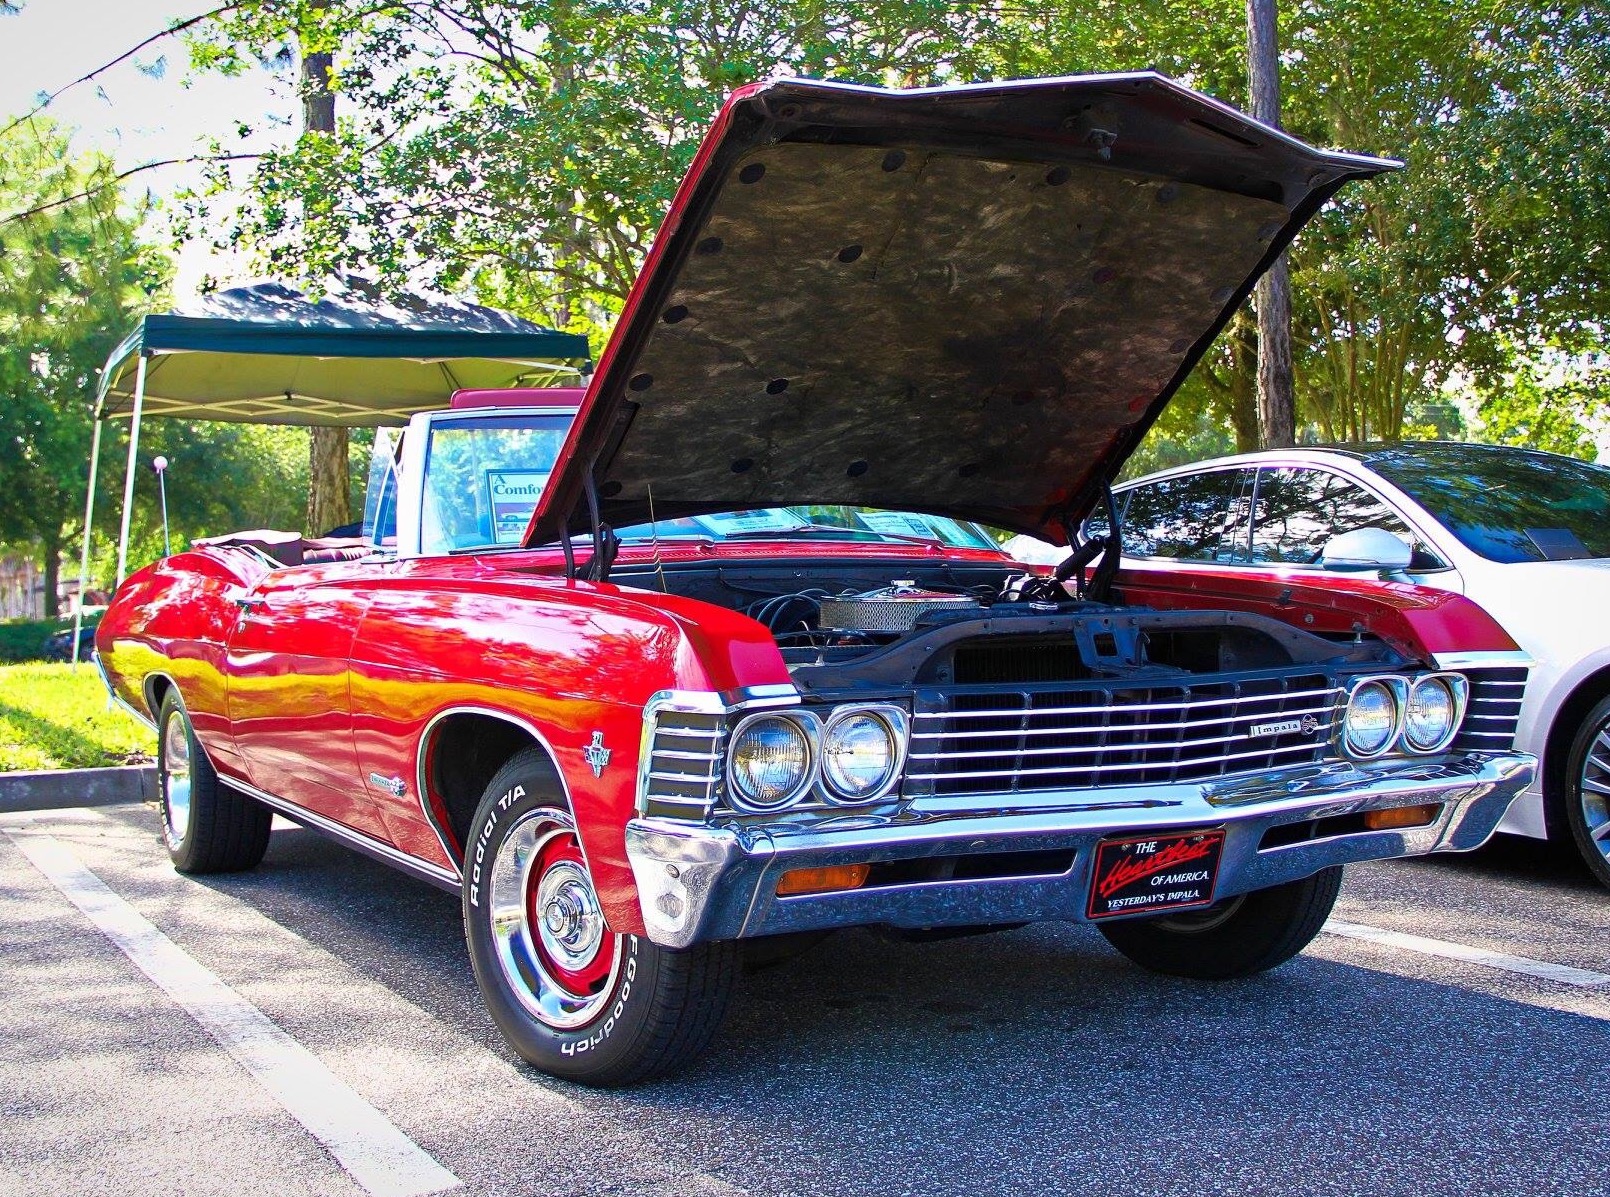 1967 Chevrolet Impala SS | Classic Car Restoration Club